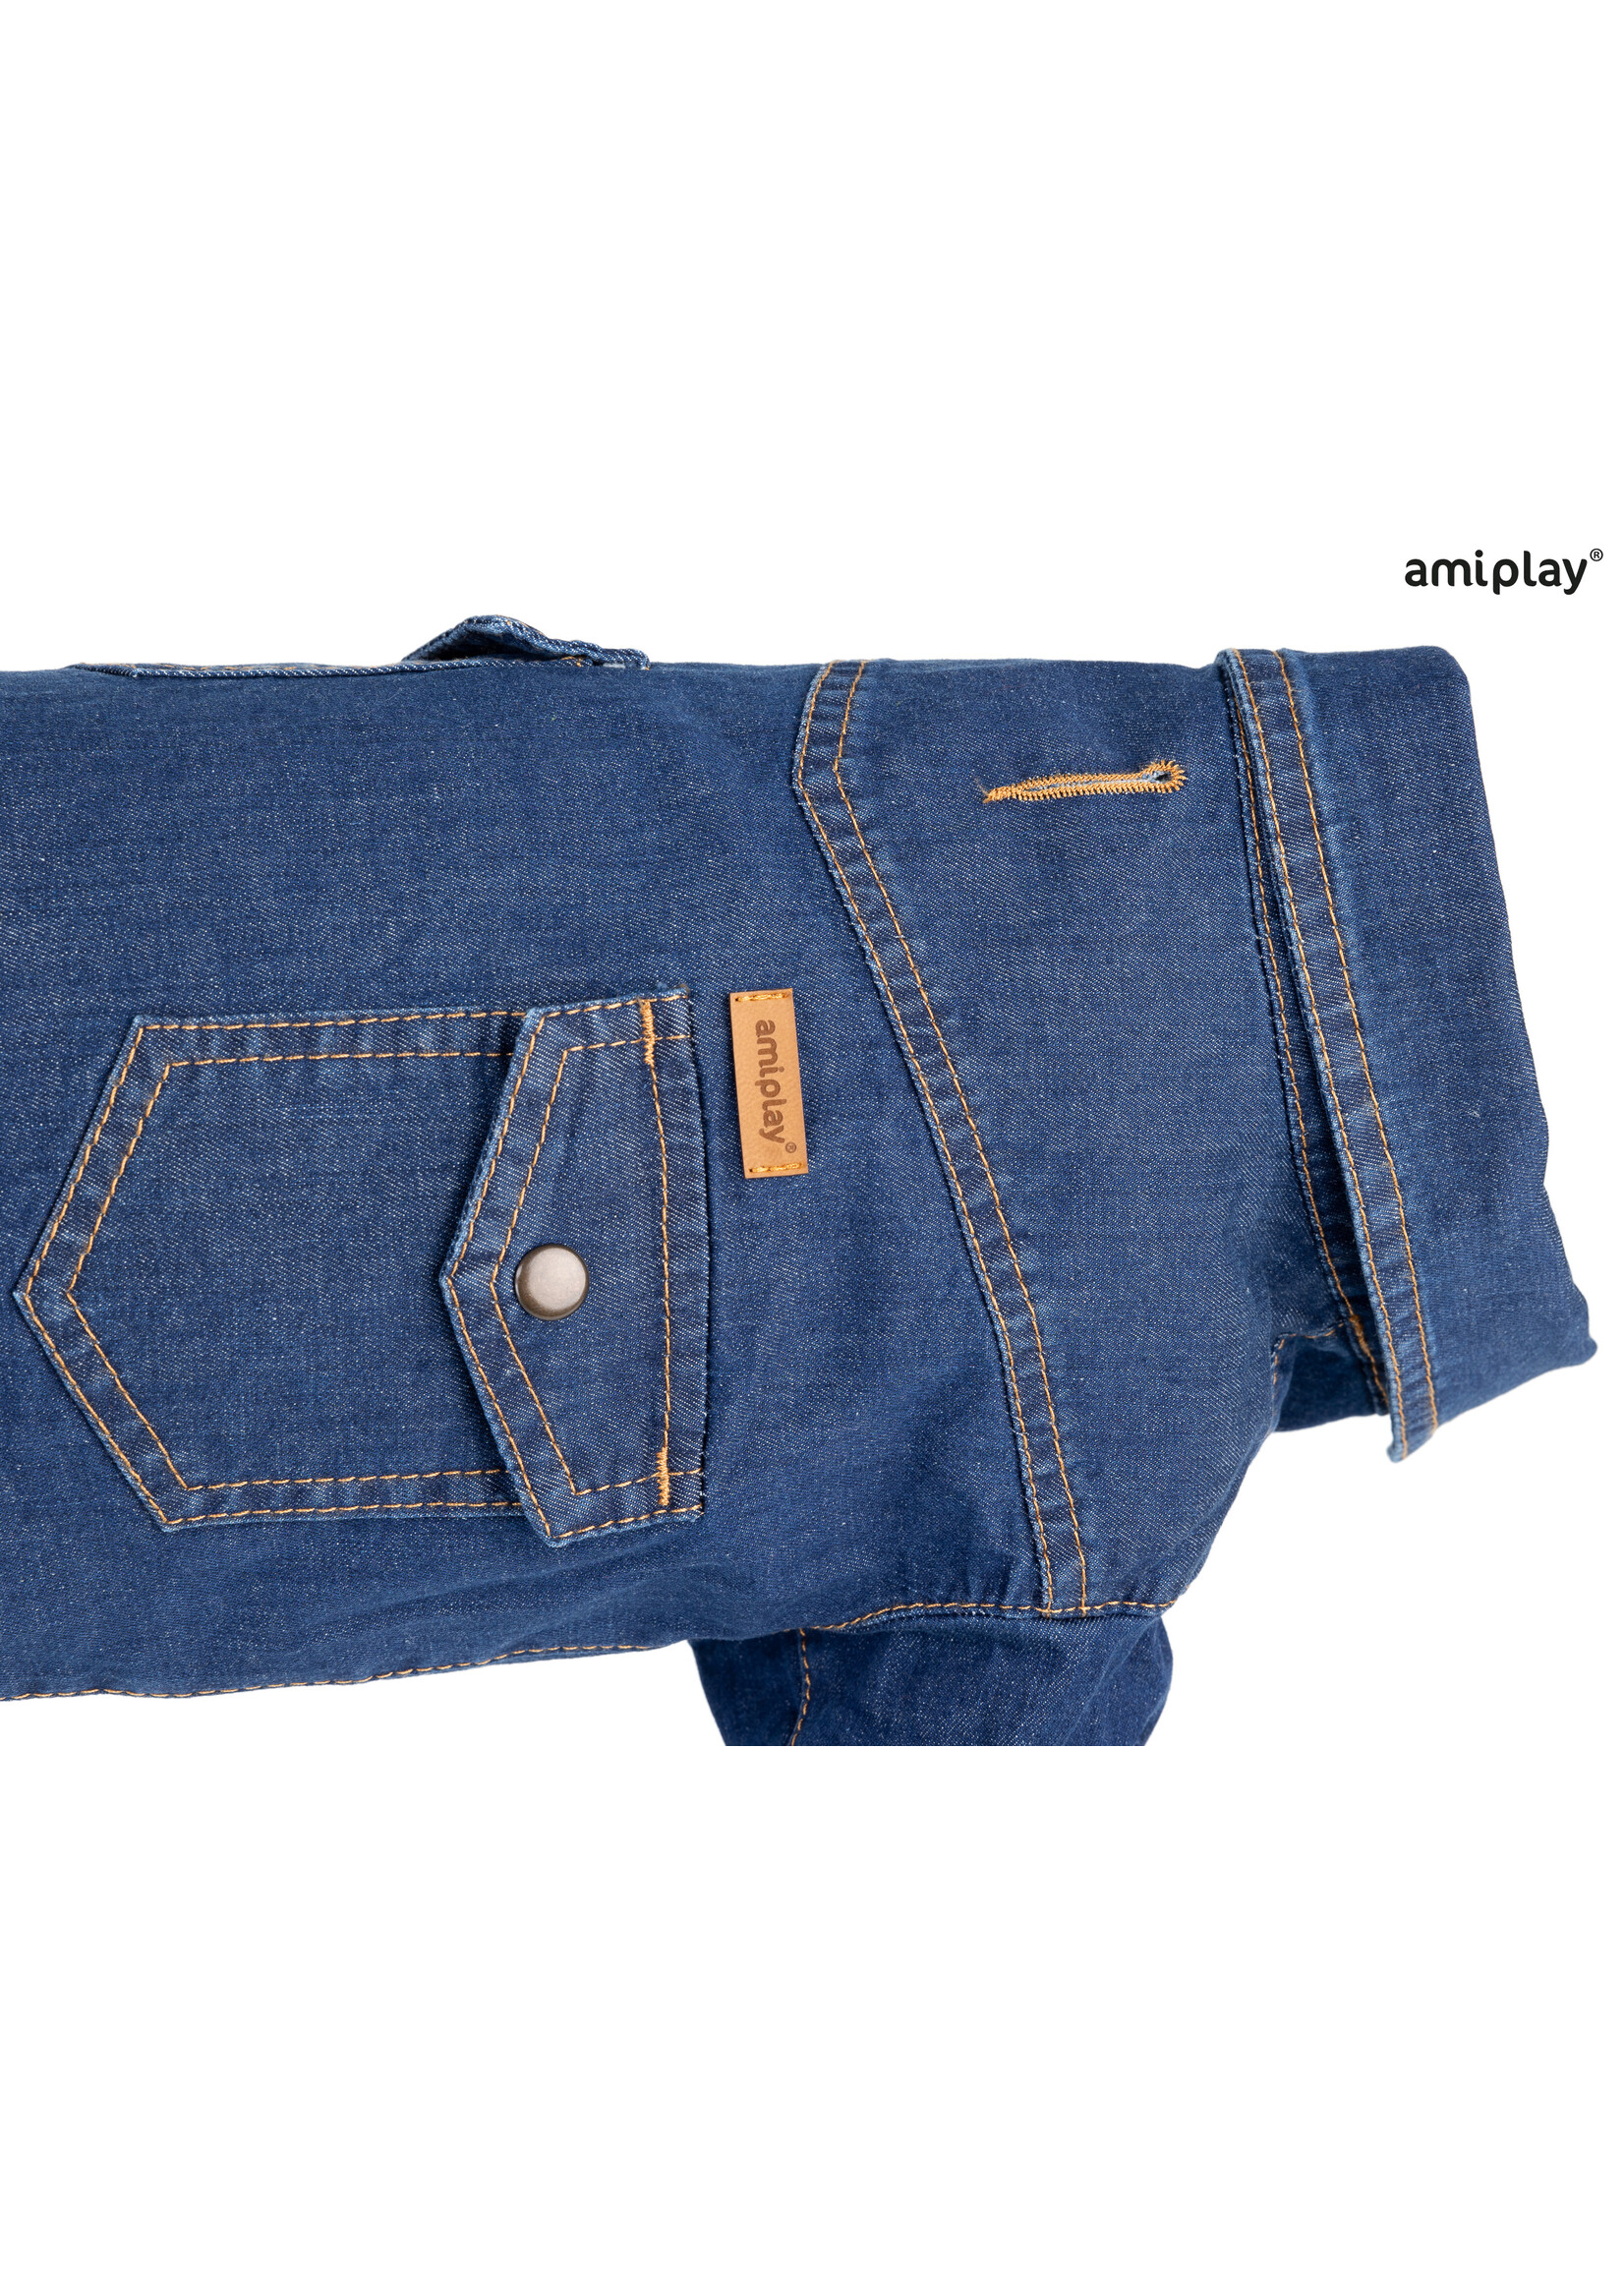 Amiplay Shirt Denim donker blauw 45 cm